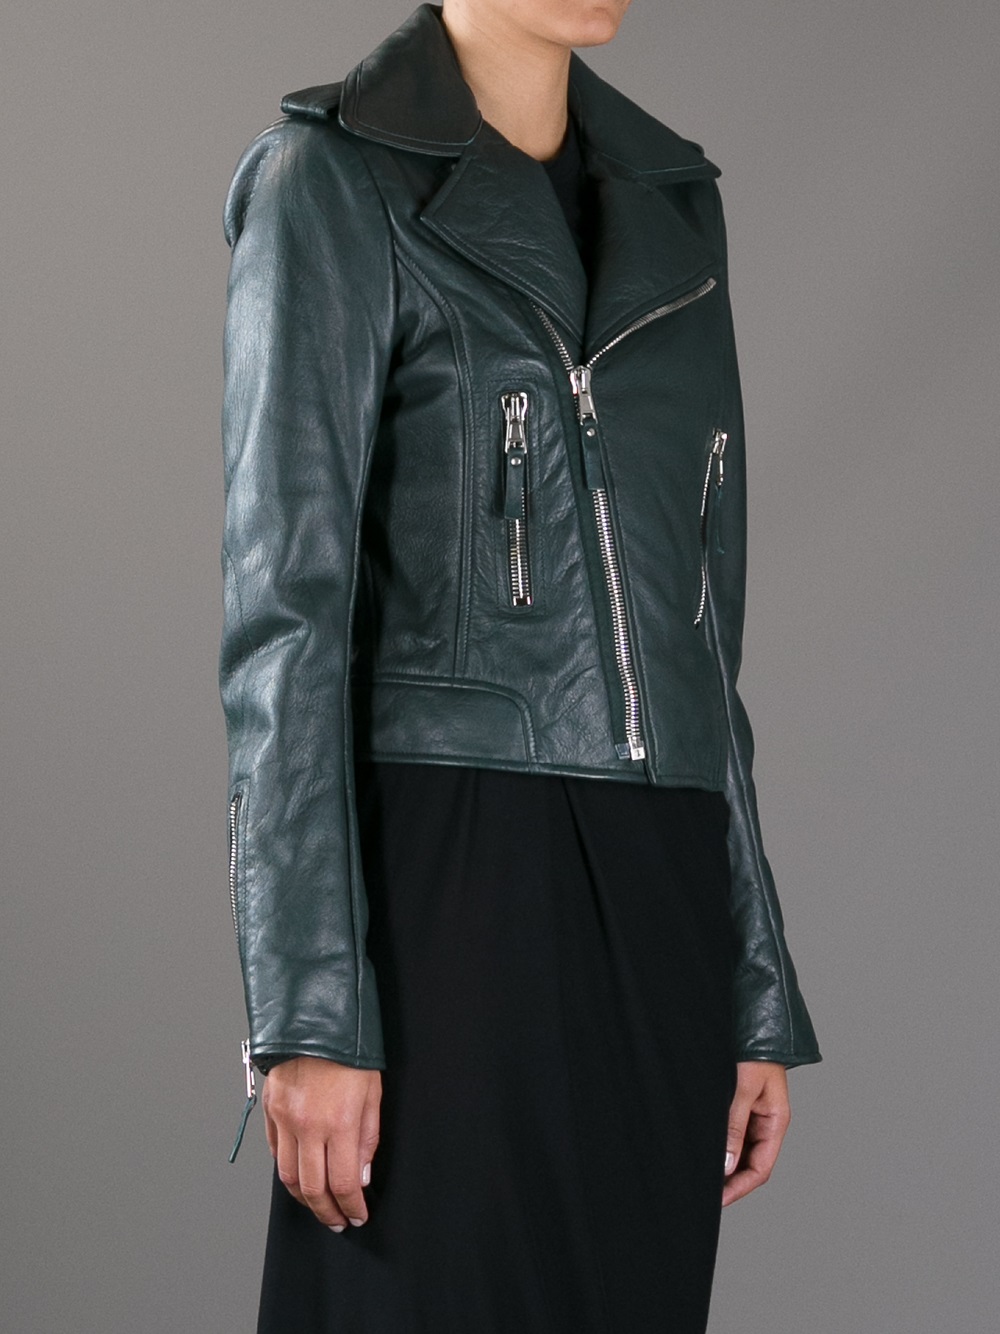 Balenciaga Leather Jacket in Green - Lyst